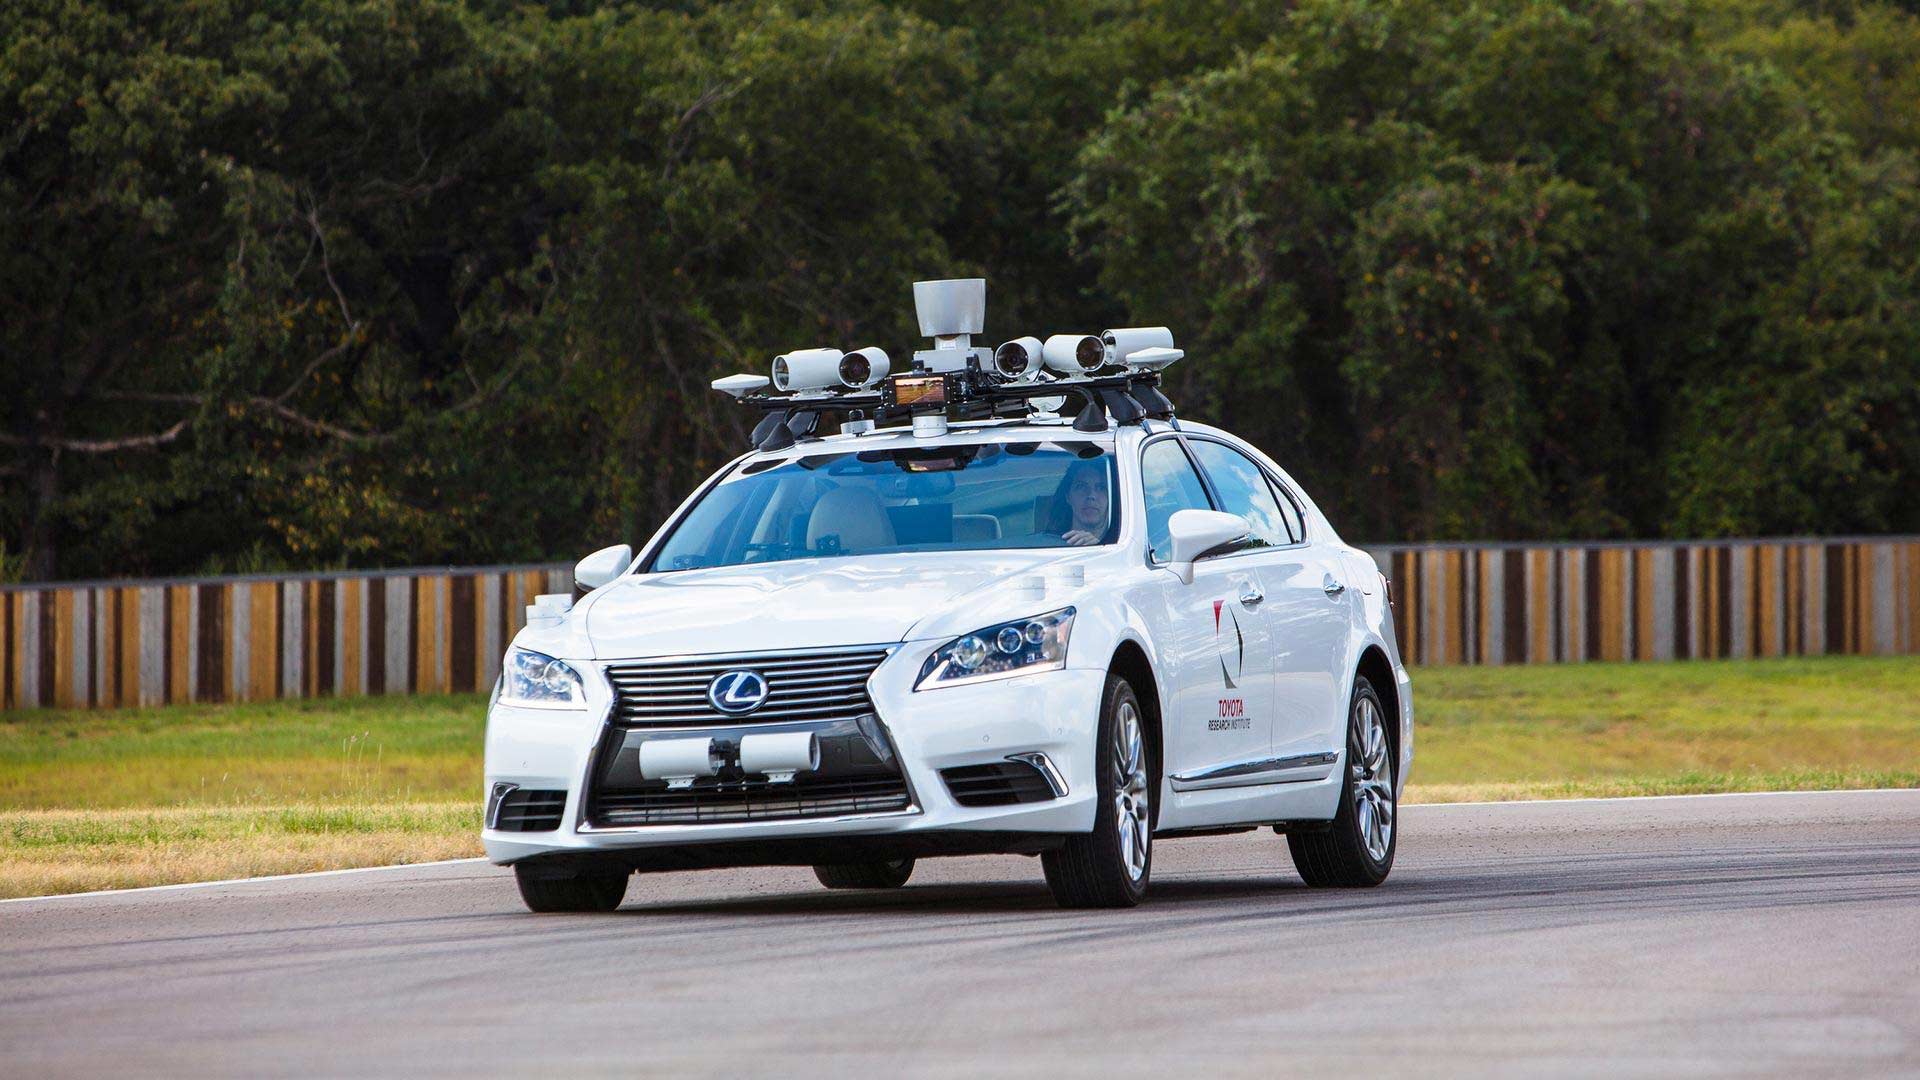 Toyota demonstrates Guardian and Chauffeur autonomous technology